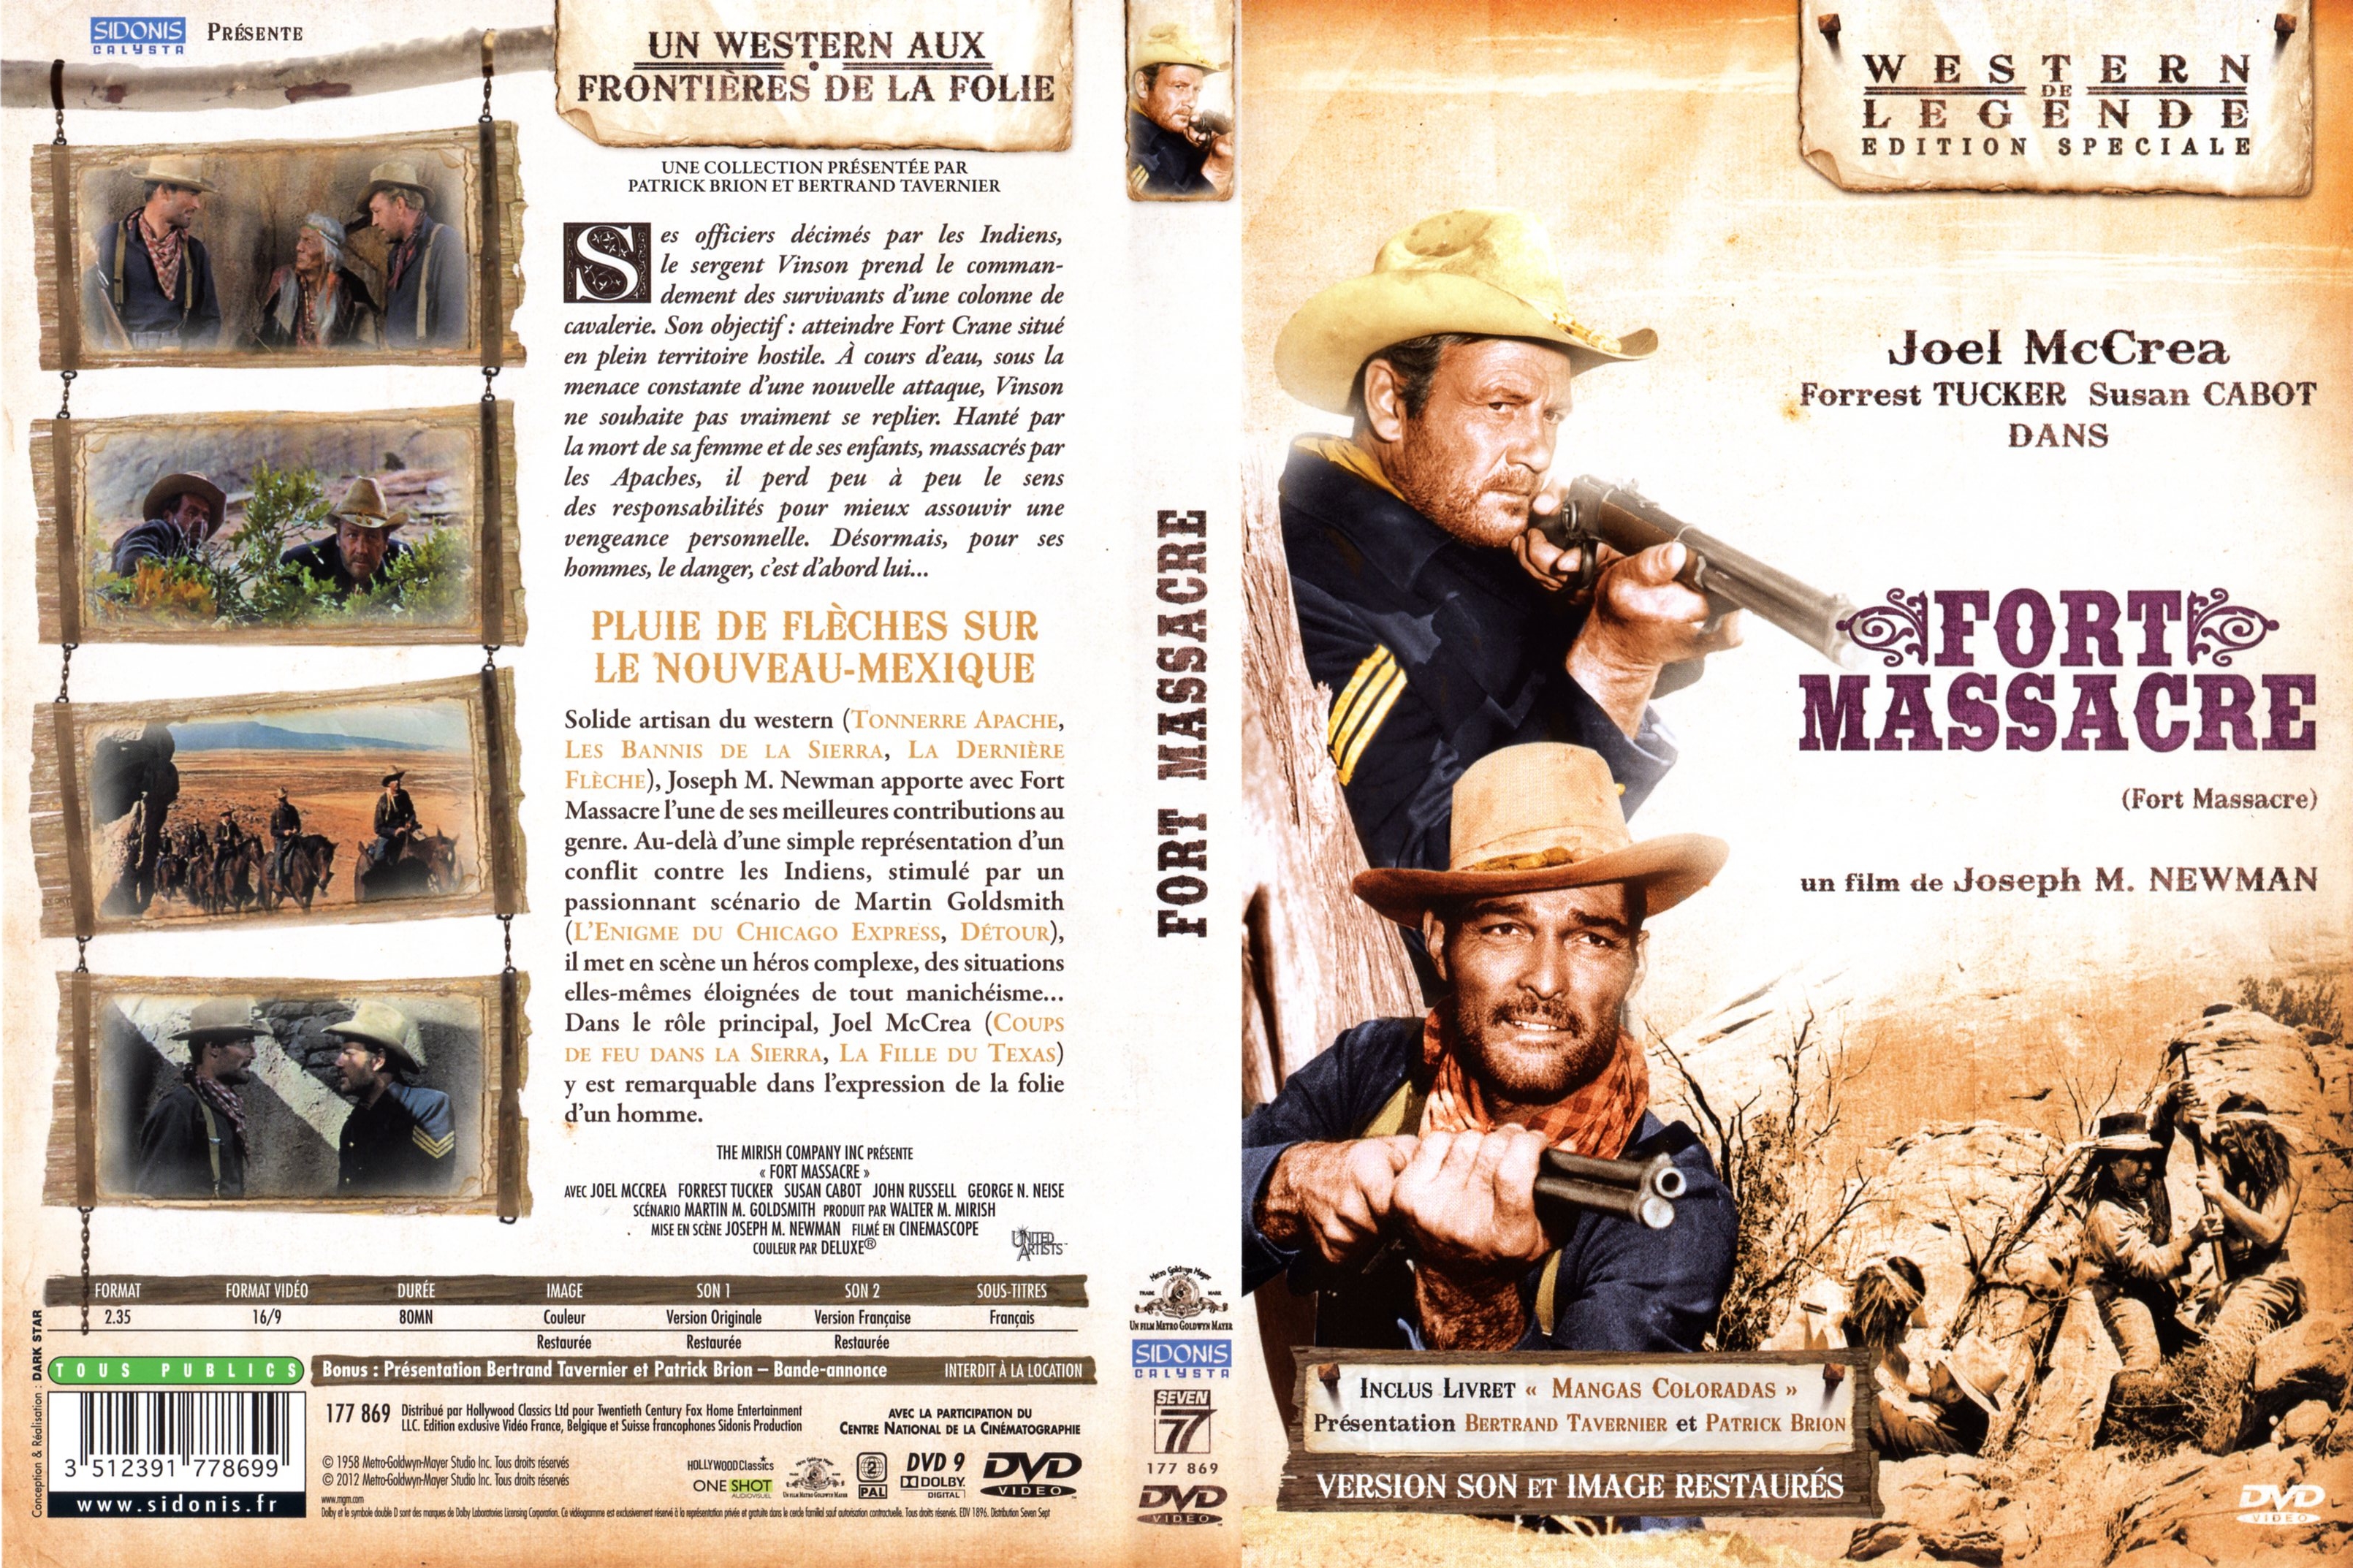 Jaquette DVD Fort massacre